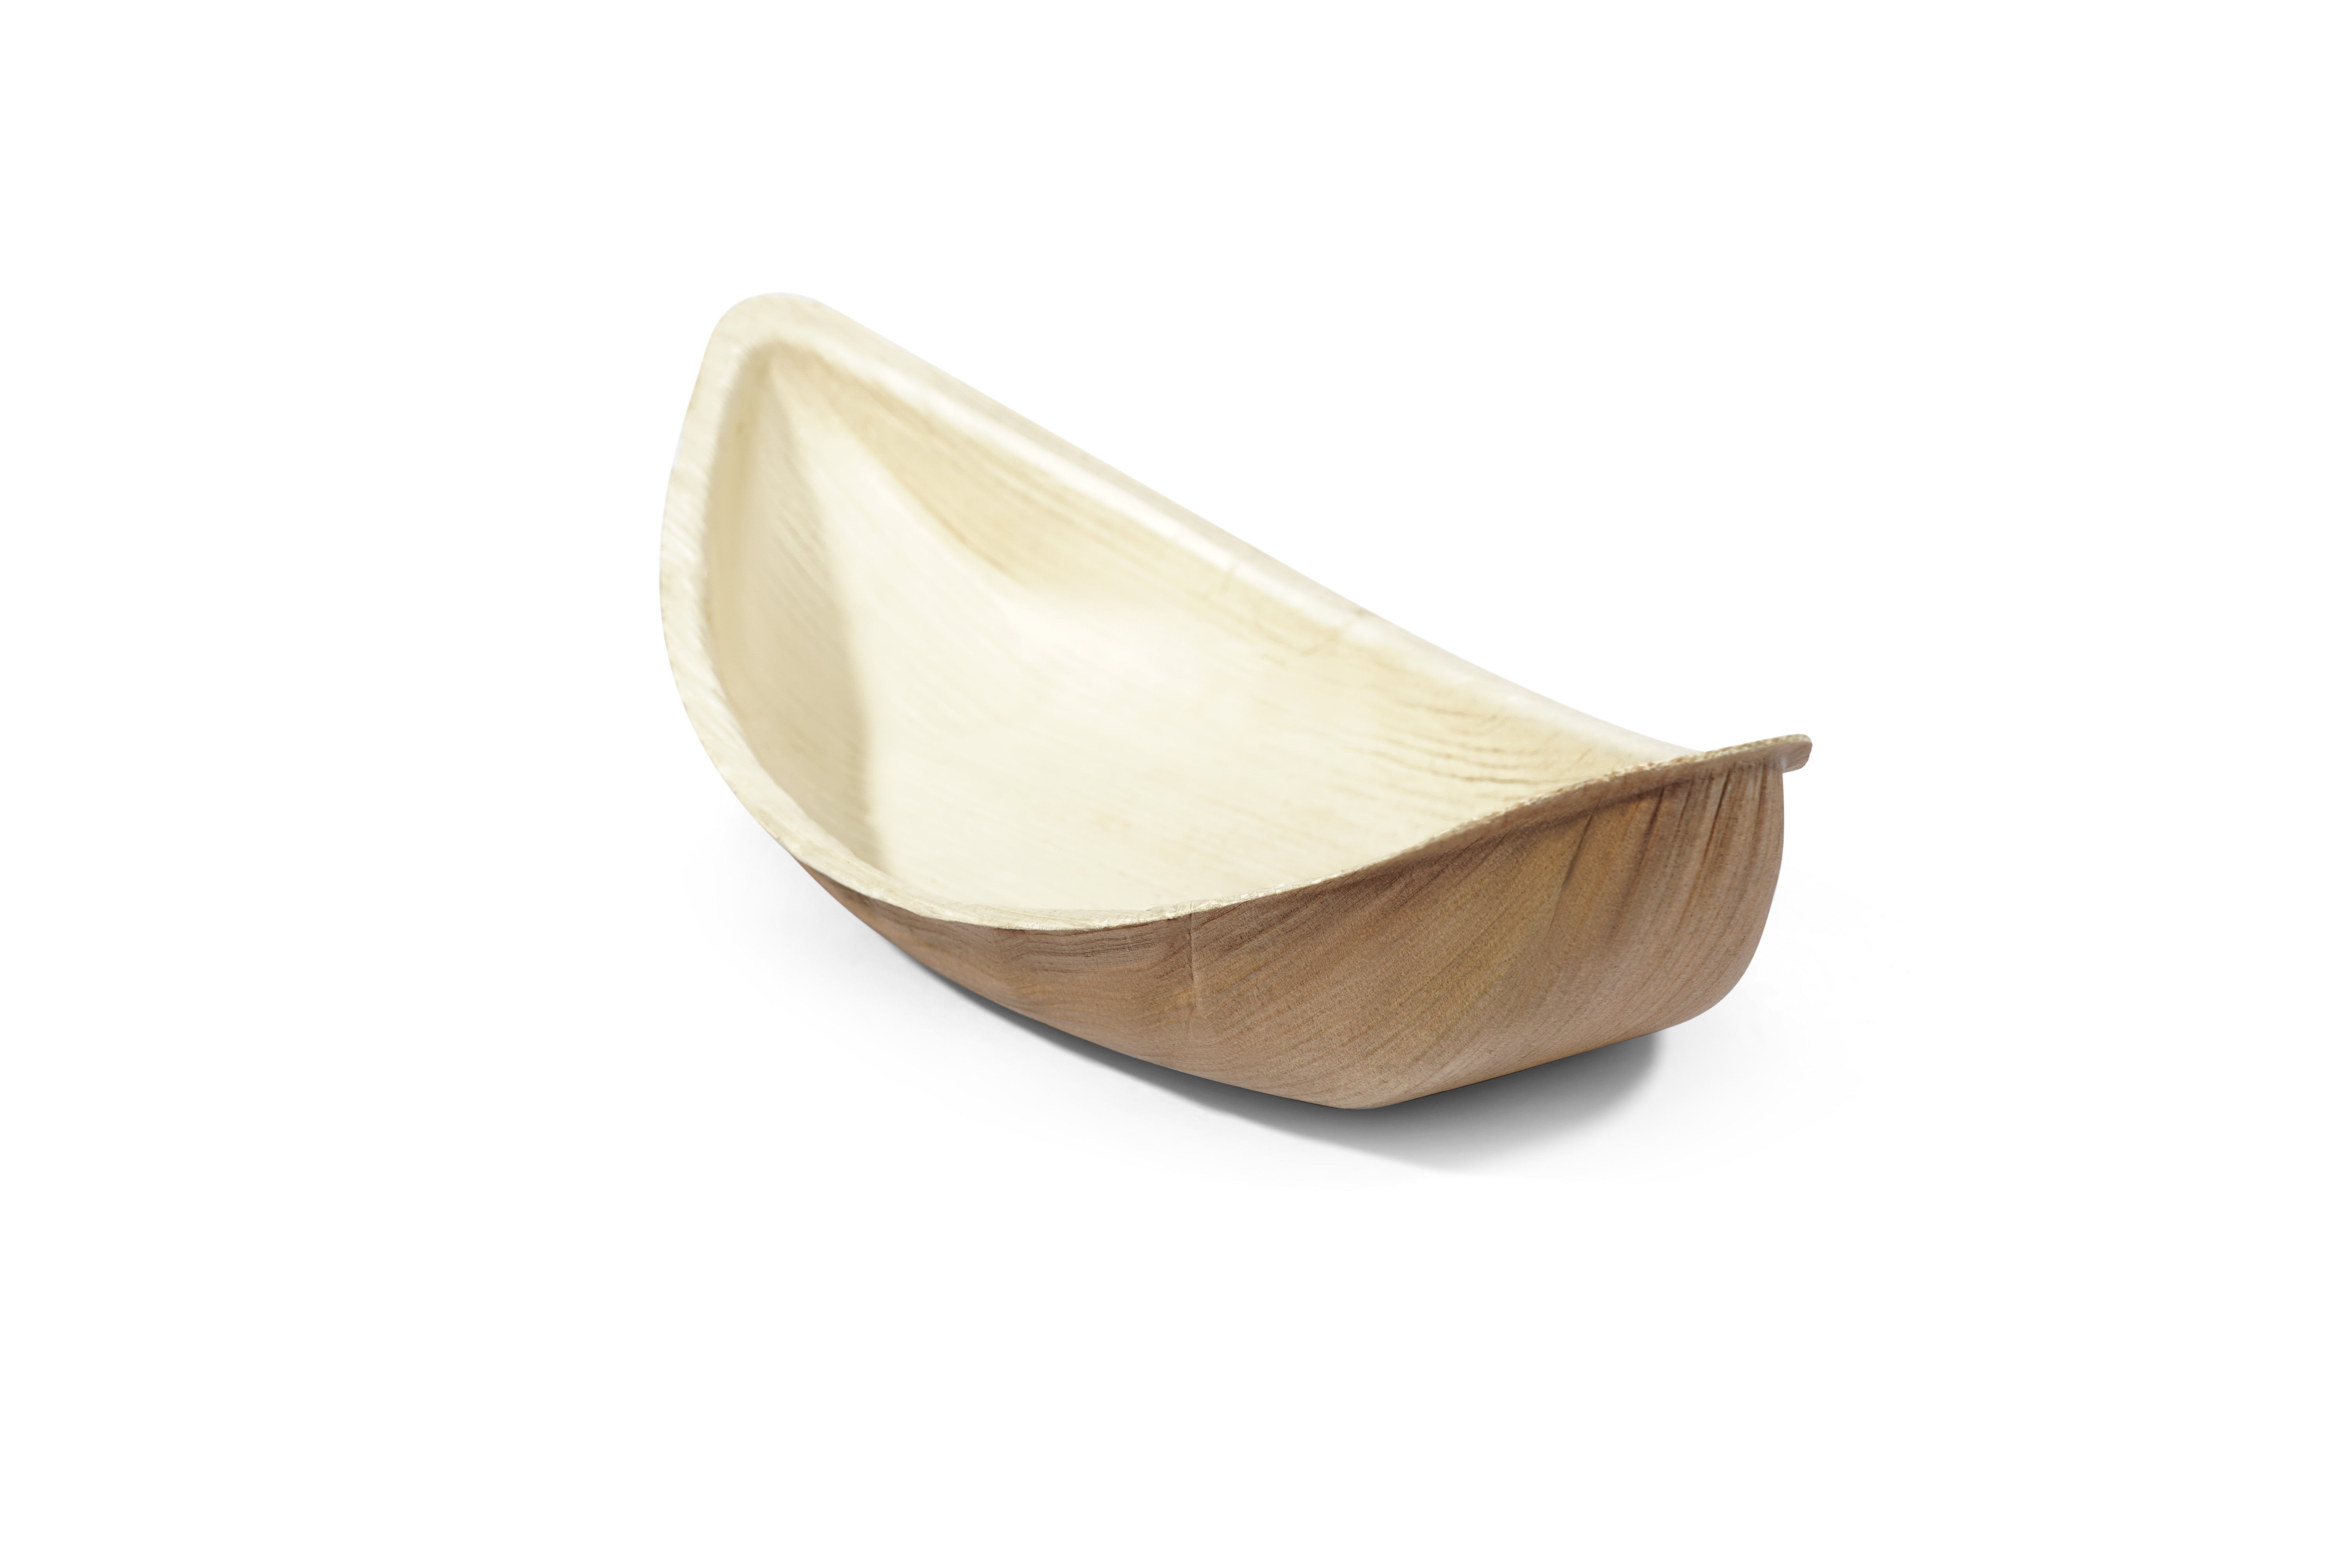 Envome Areca Palm Leaf Boat Bowl (30cm,20cm &10cm)